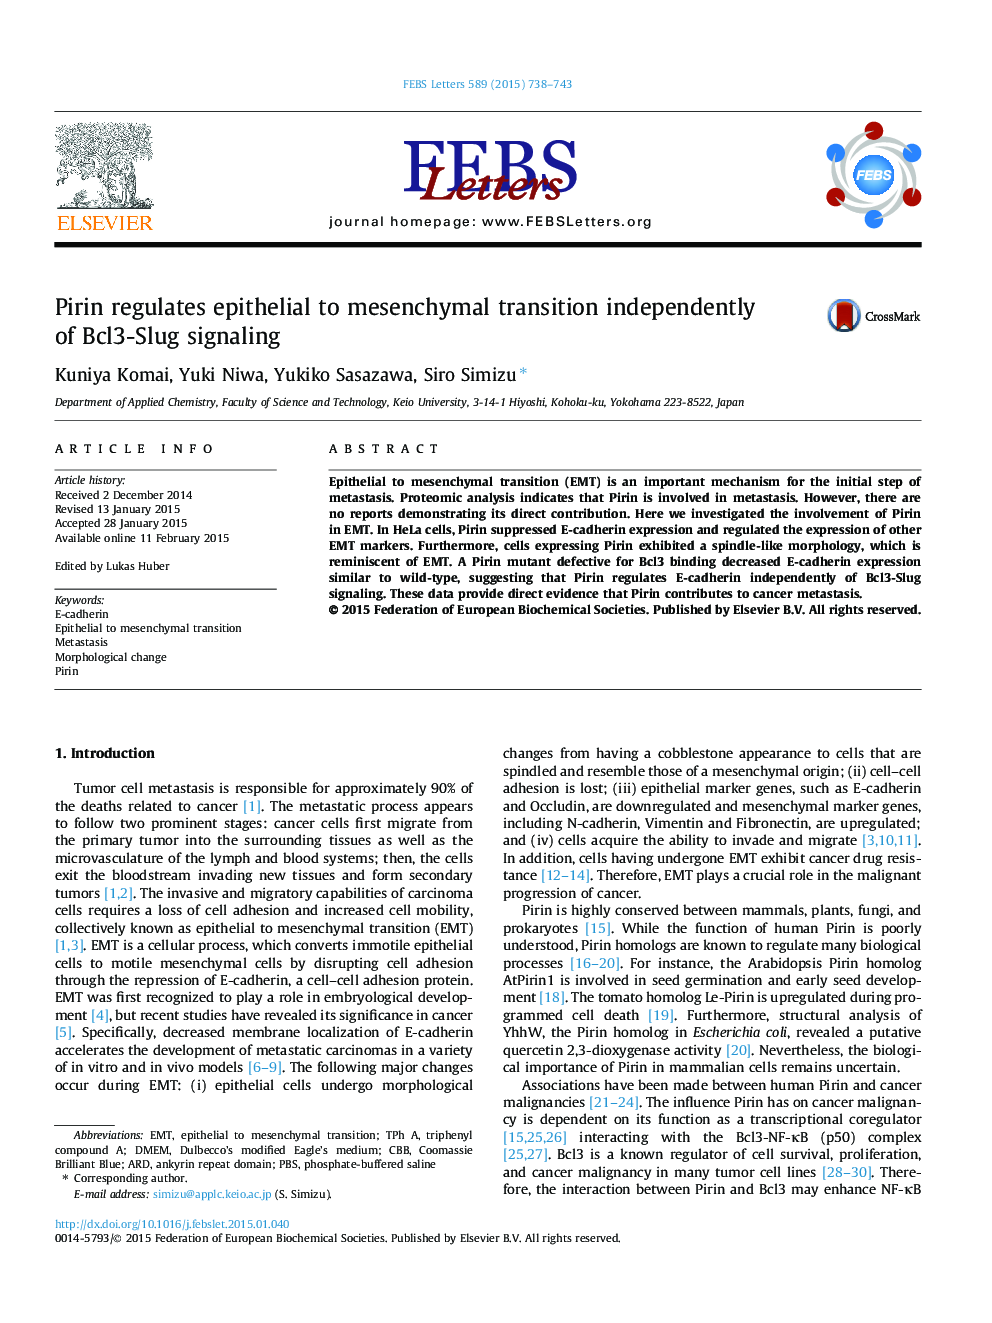 Pirin regulates epithelial to mesenchymal transition independently of Bcl3-Slug signaling